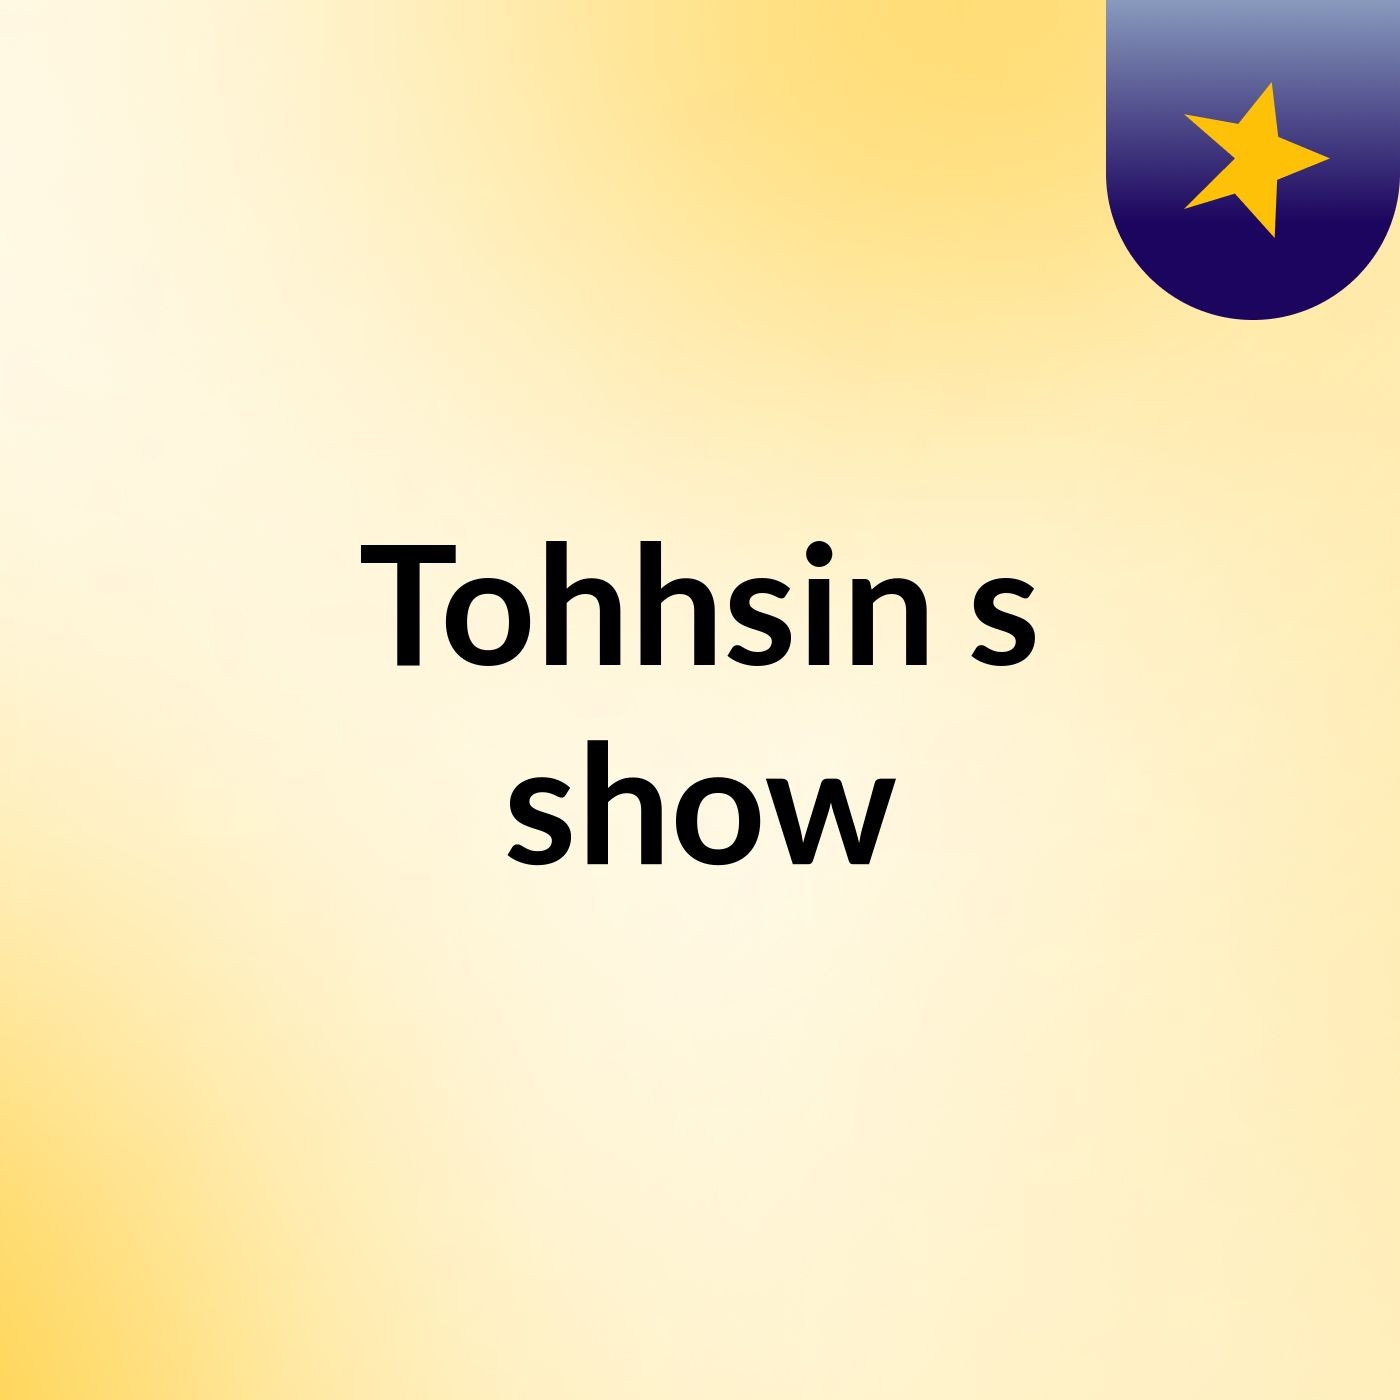 Tohhsin's show